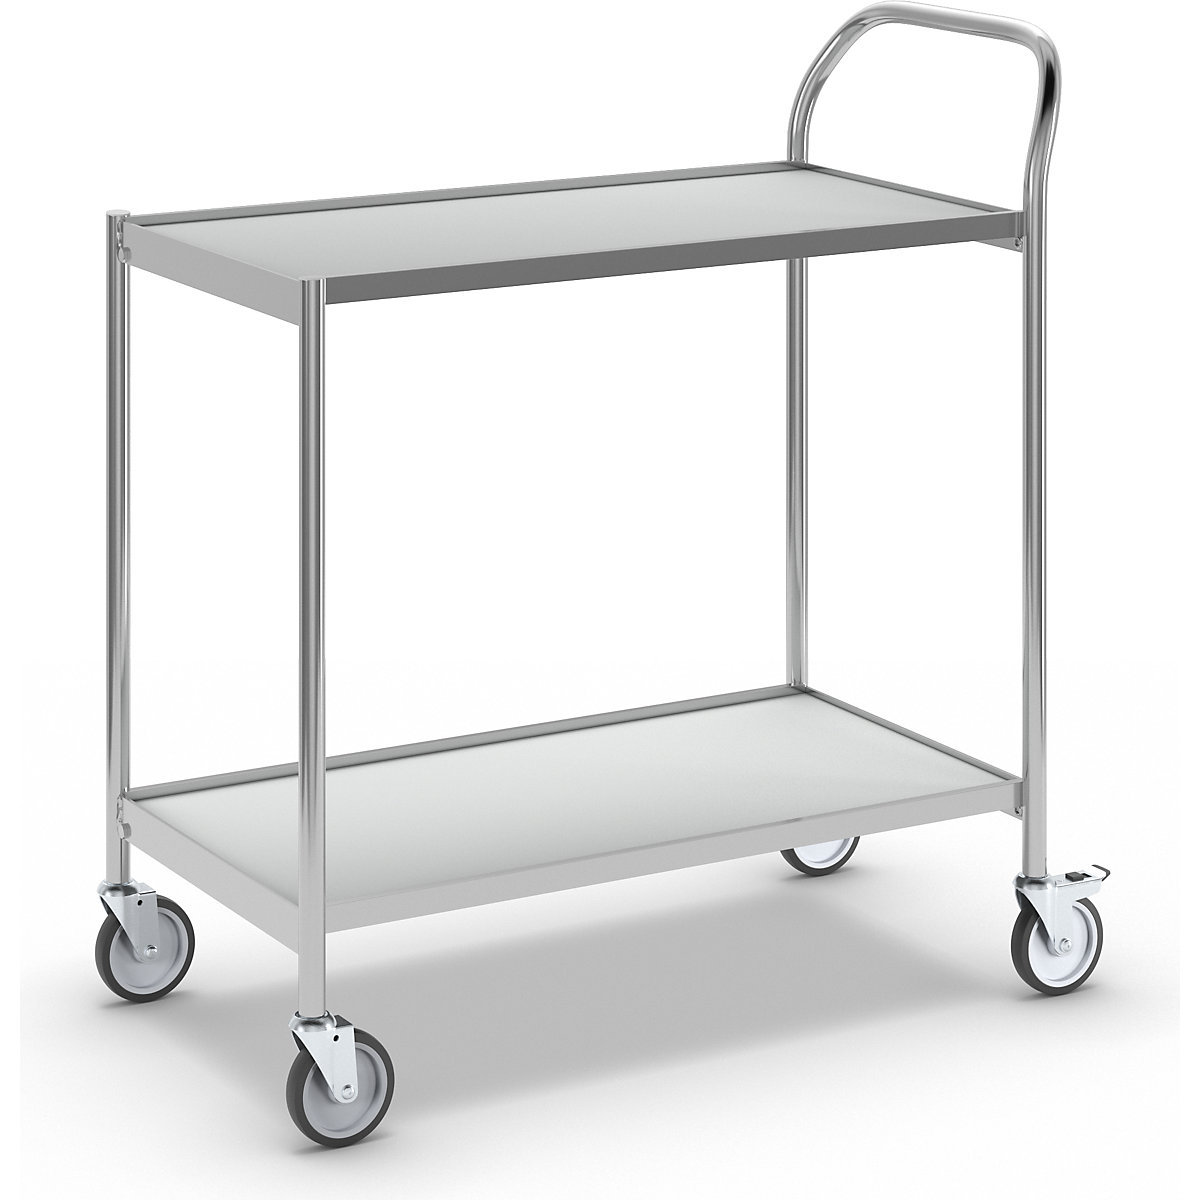 Stolový vozík – HelgeNyberg, 2 etáže, d x š 800 x 420 mm, chrom / šedá-2